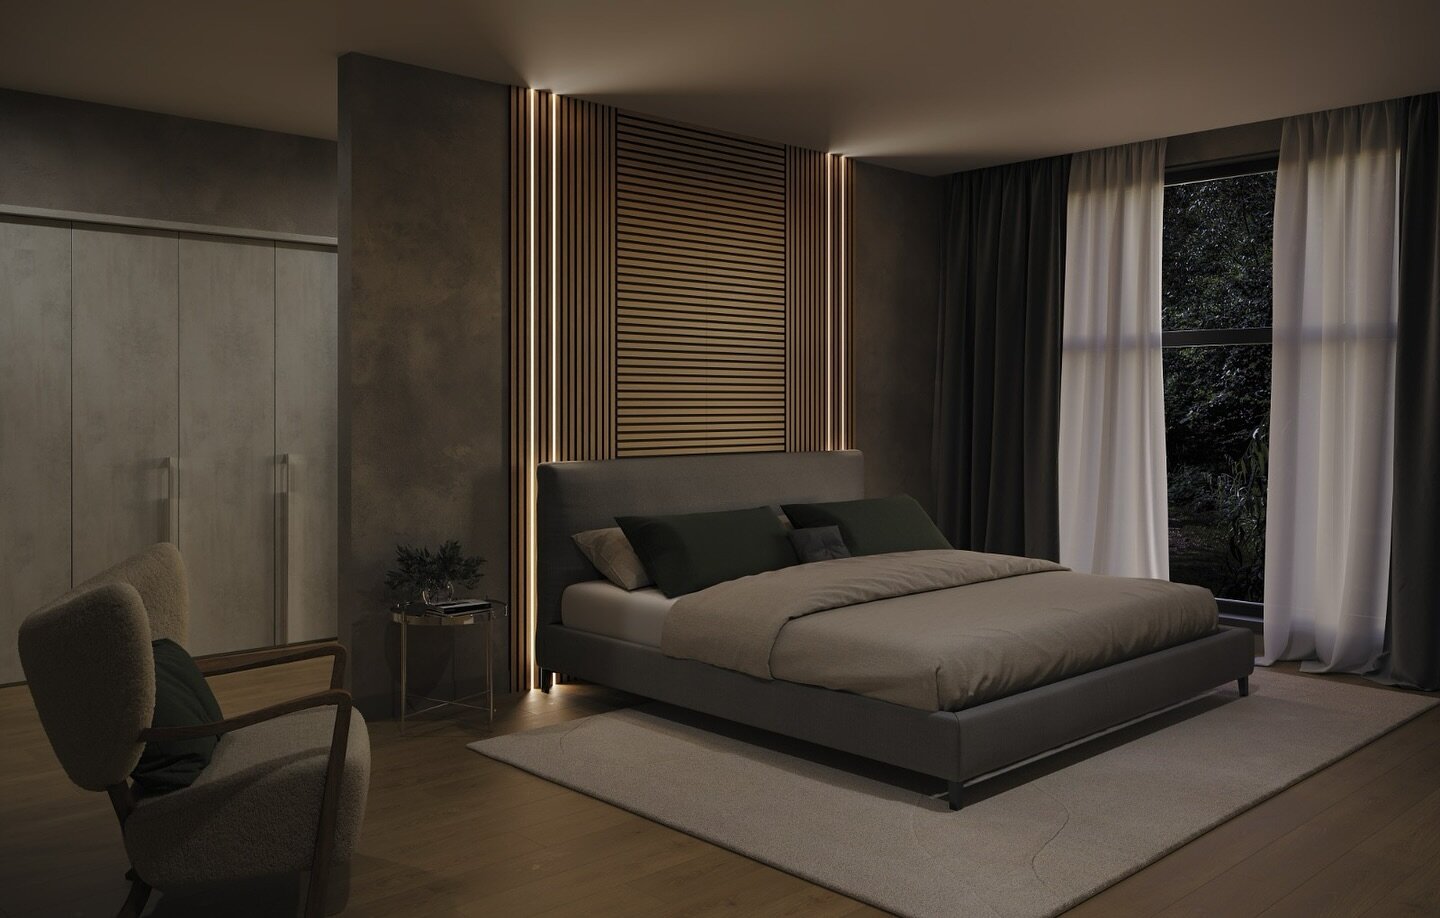 Bedroom inspo! Unmatched acoustic performance in captivating designs! 🔗 https://globaldoors.co.uk/slatwall #slatwall #slatwallpanels #homedecor #homedesign #interiordesign